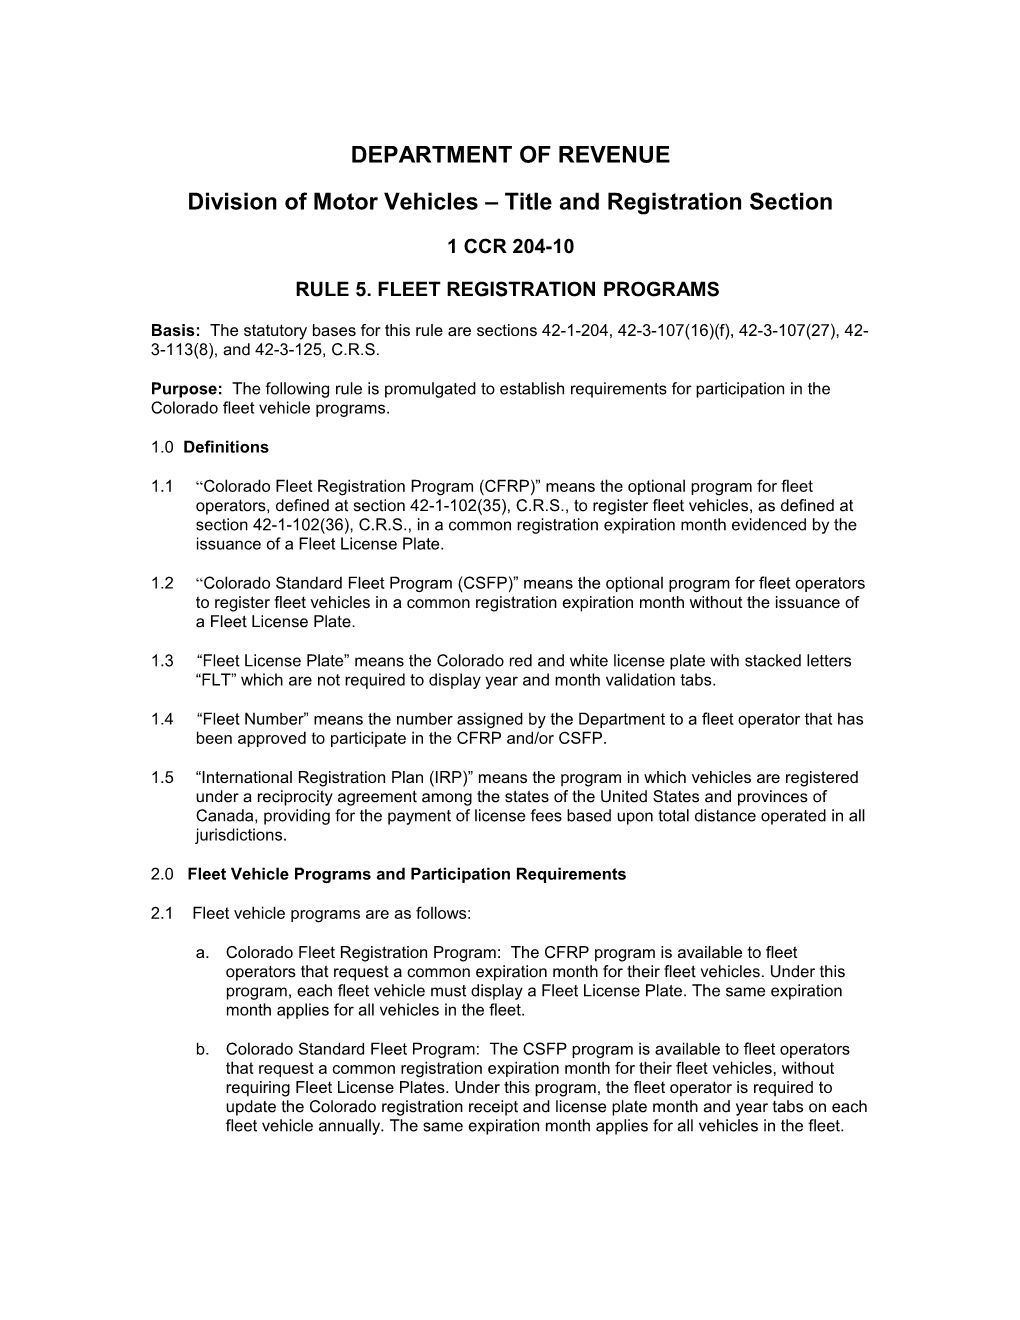 Colorado Fleet Registration Program Rules